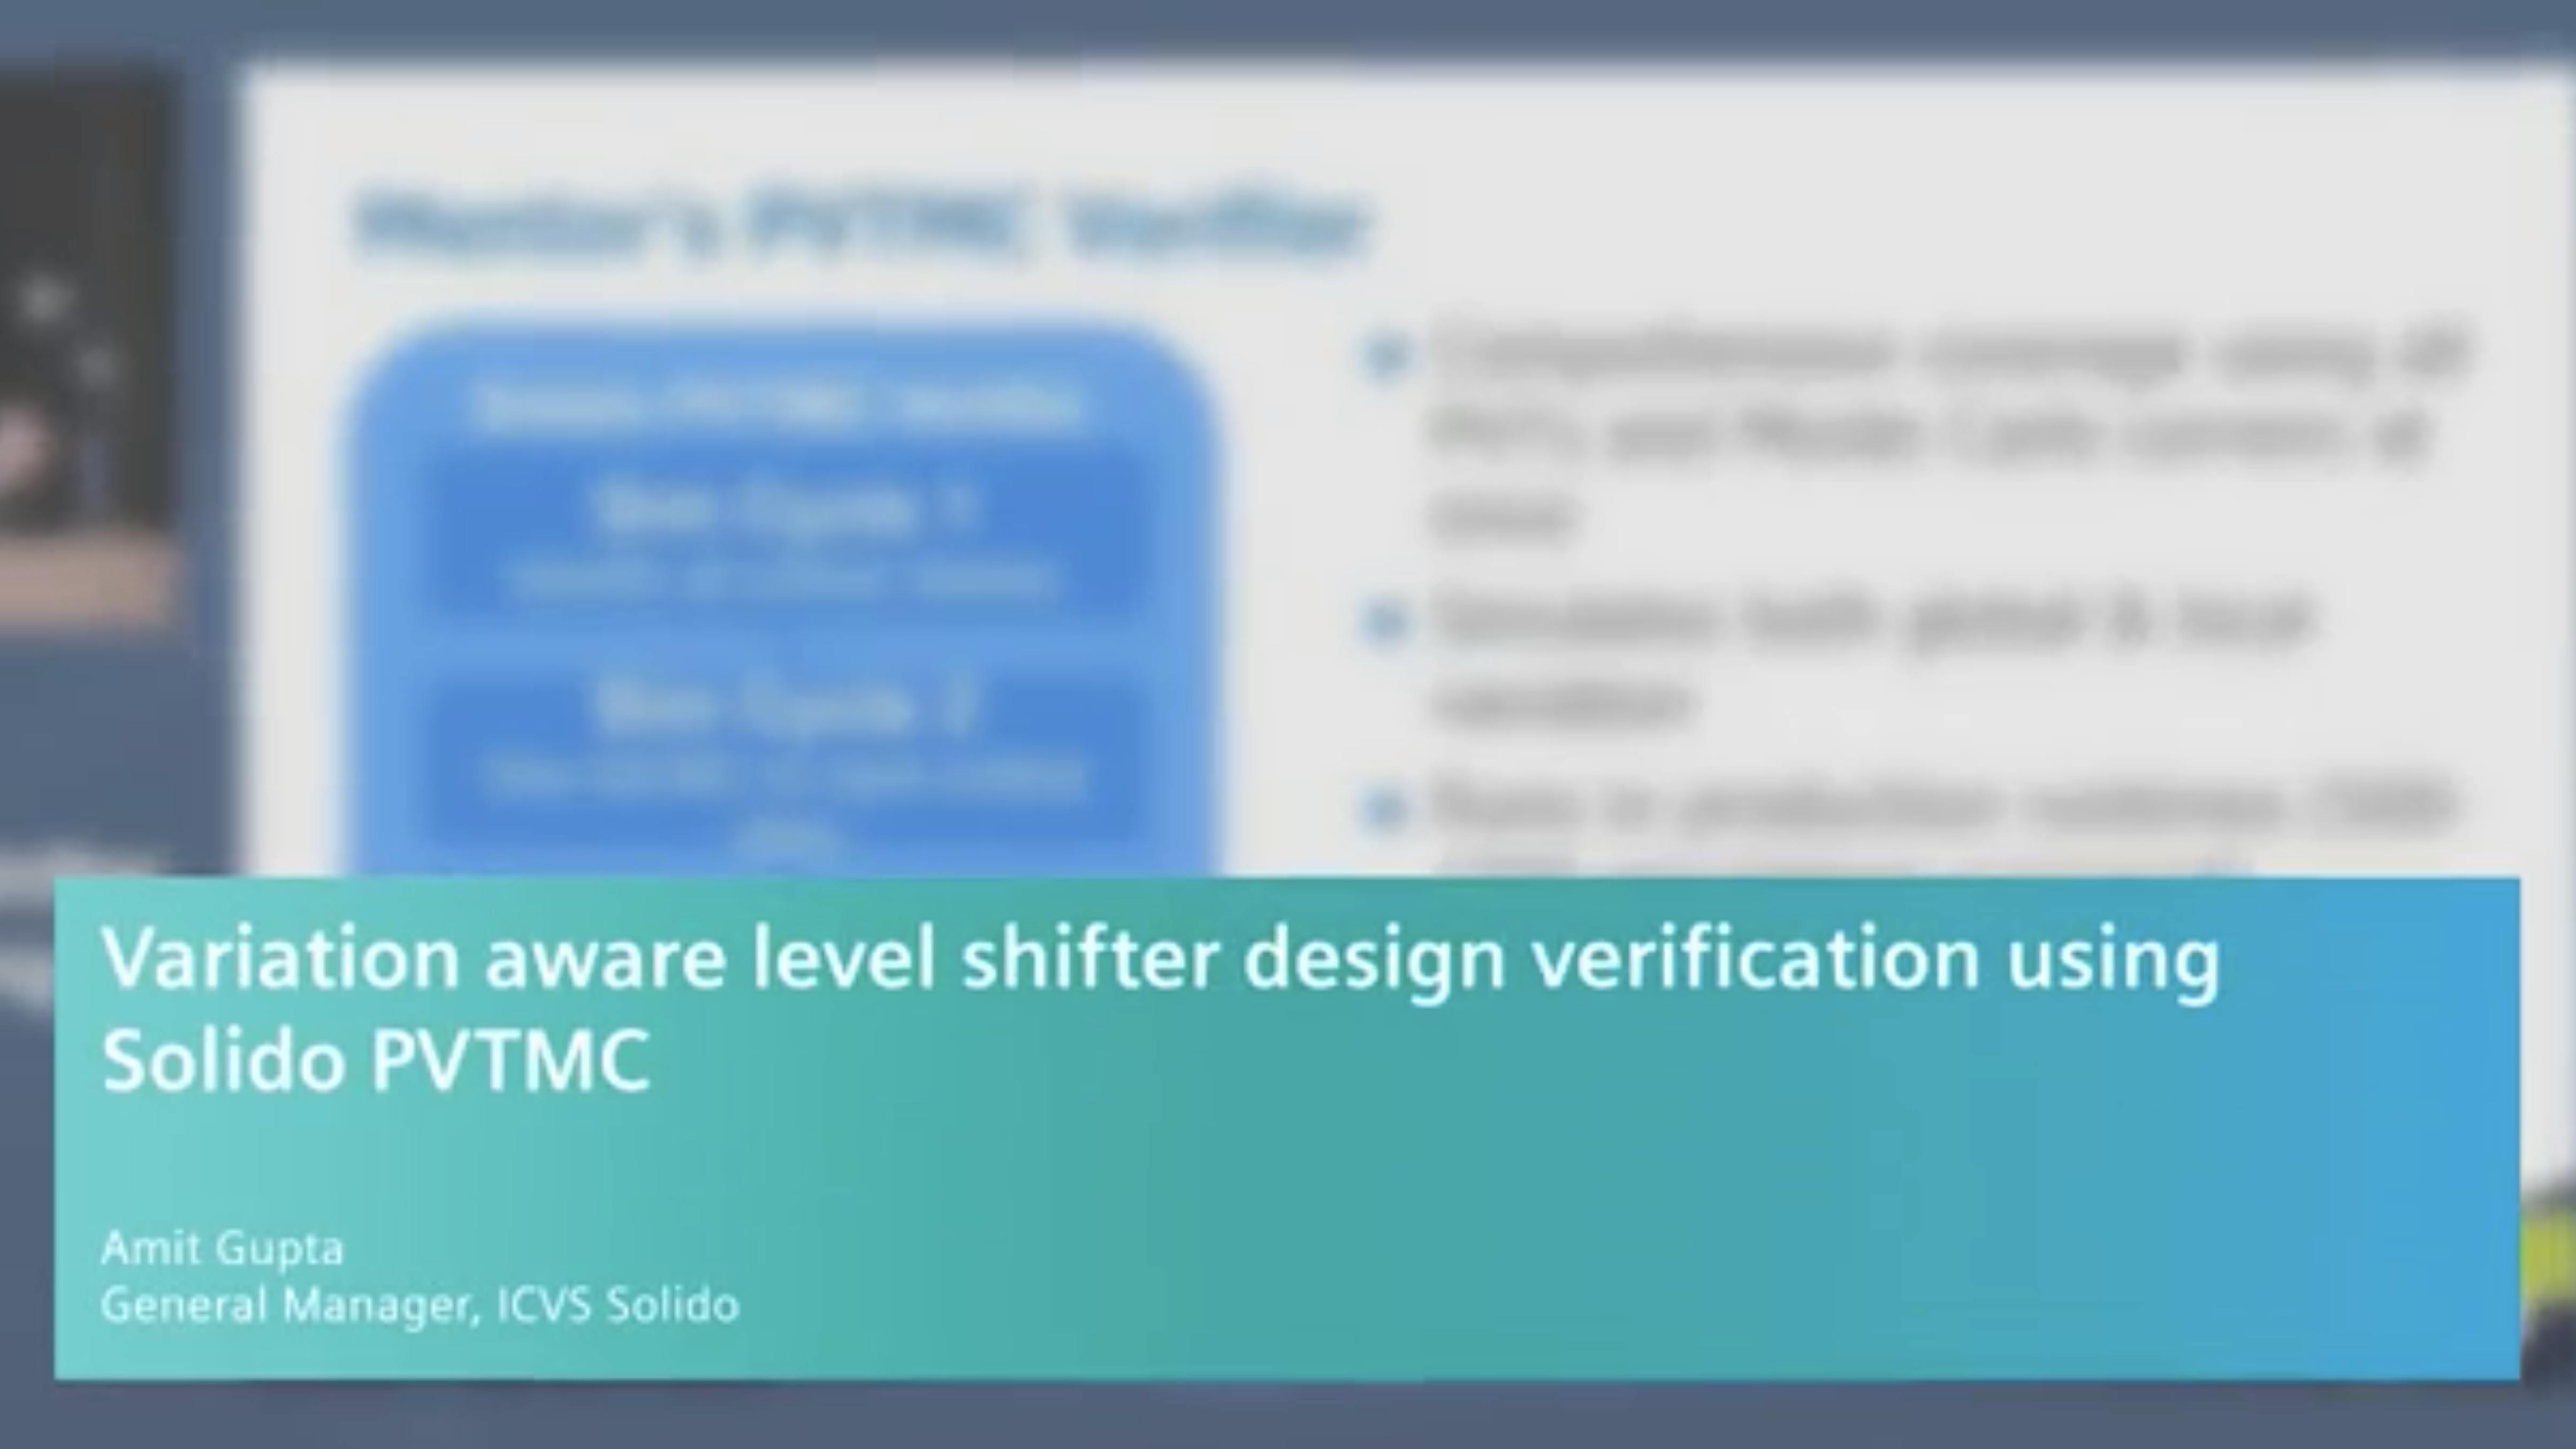 Variation aware level shifter design verification using Solido PVTMC